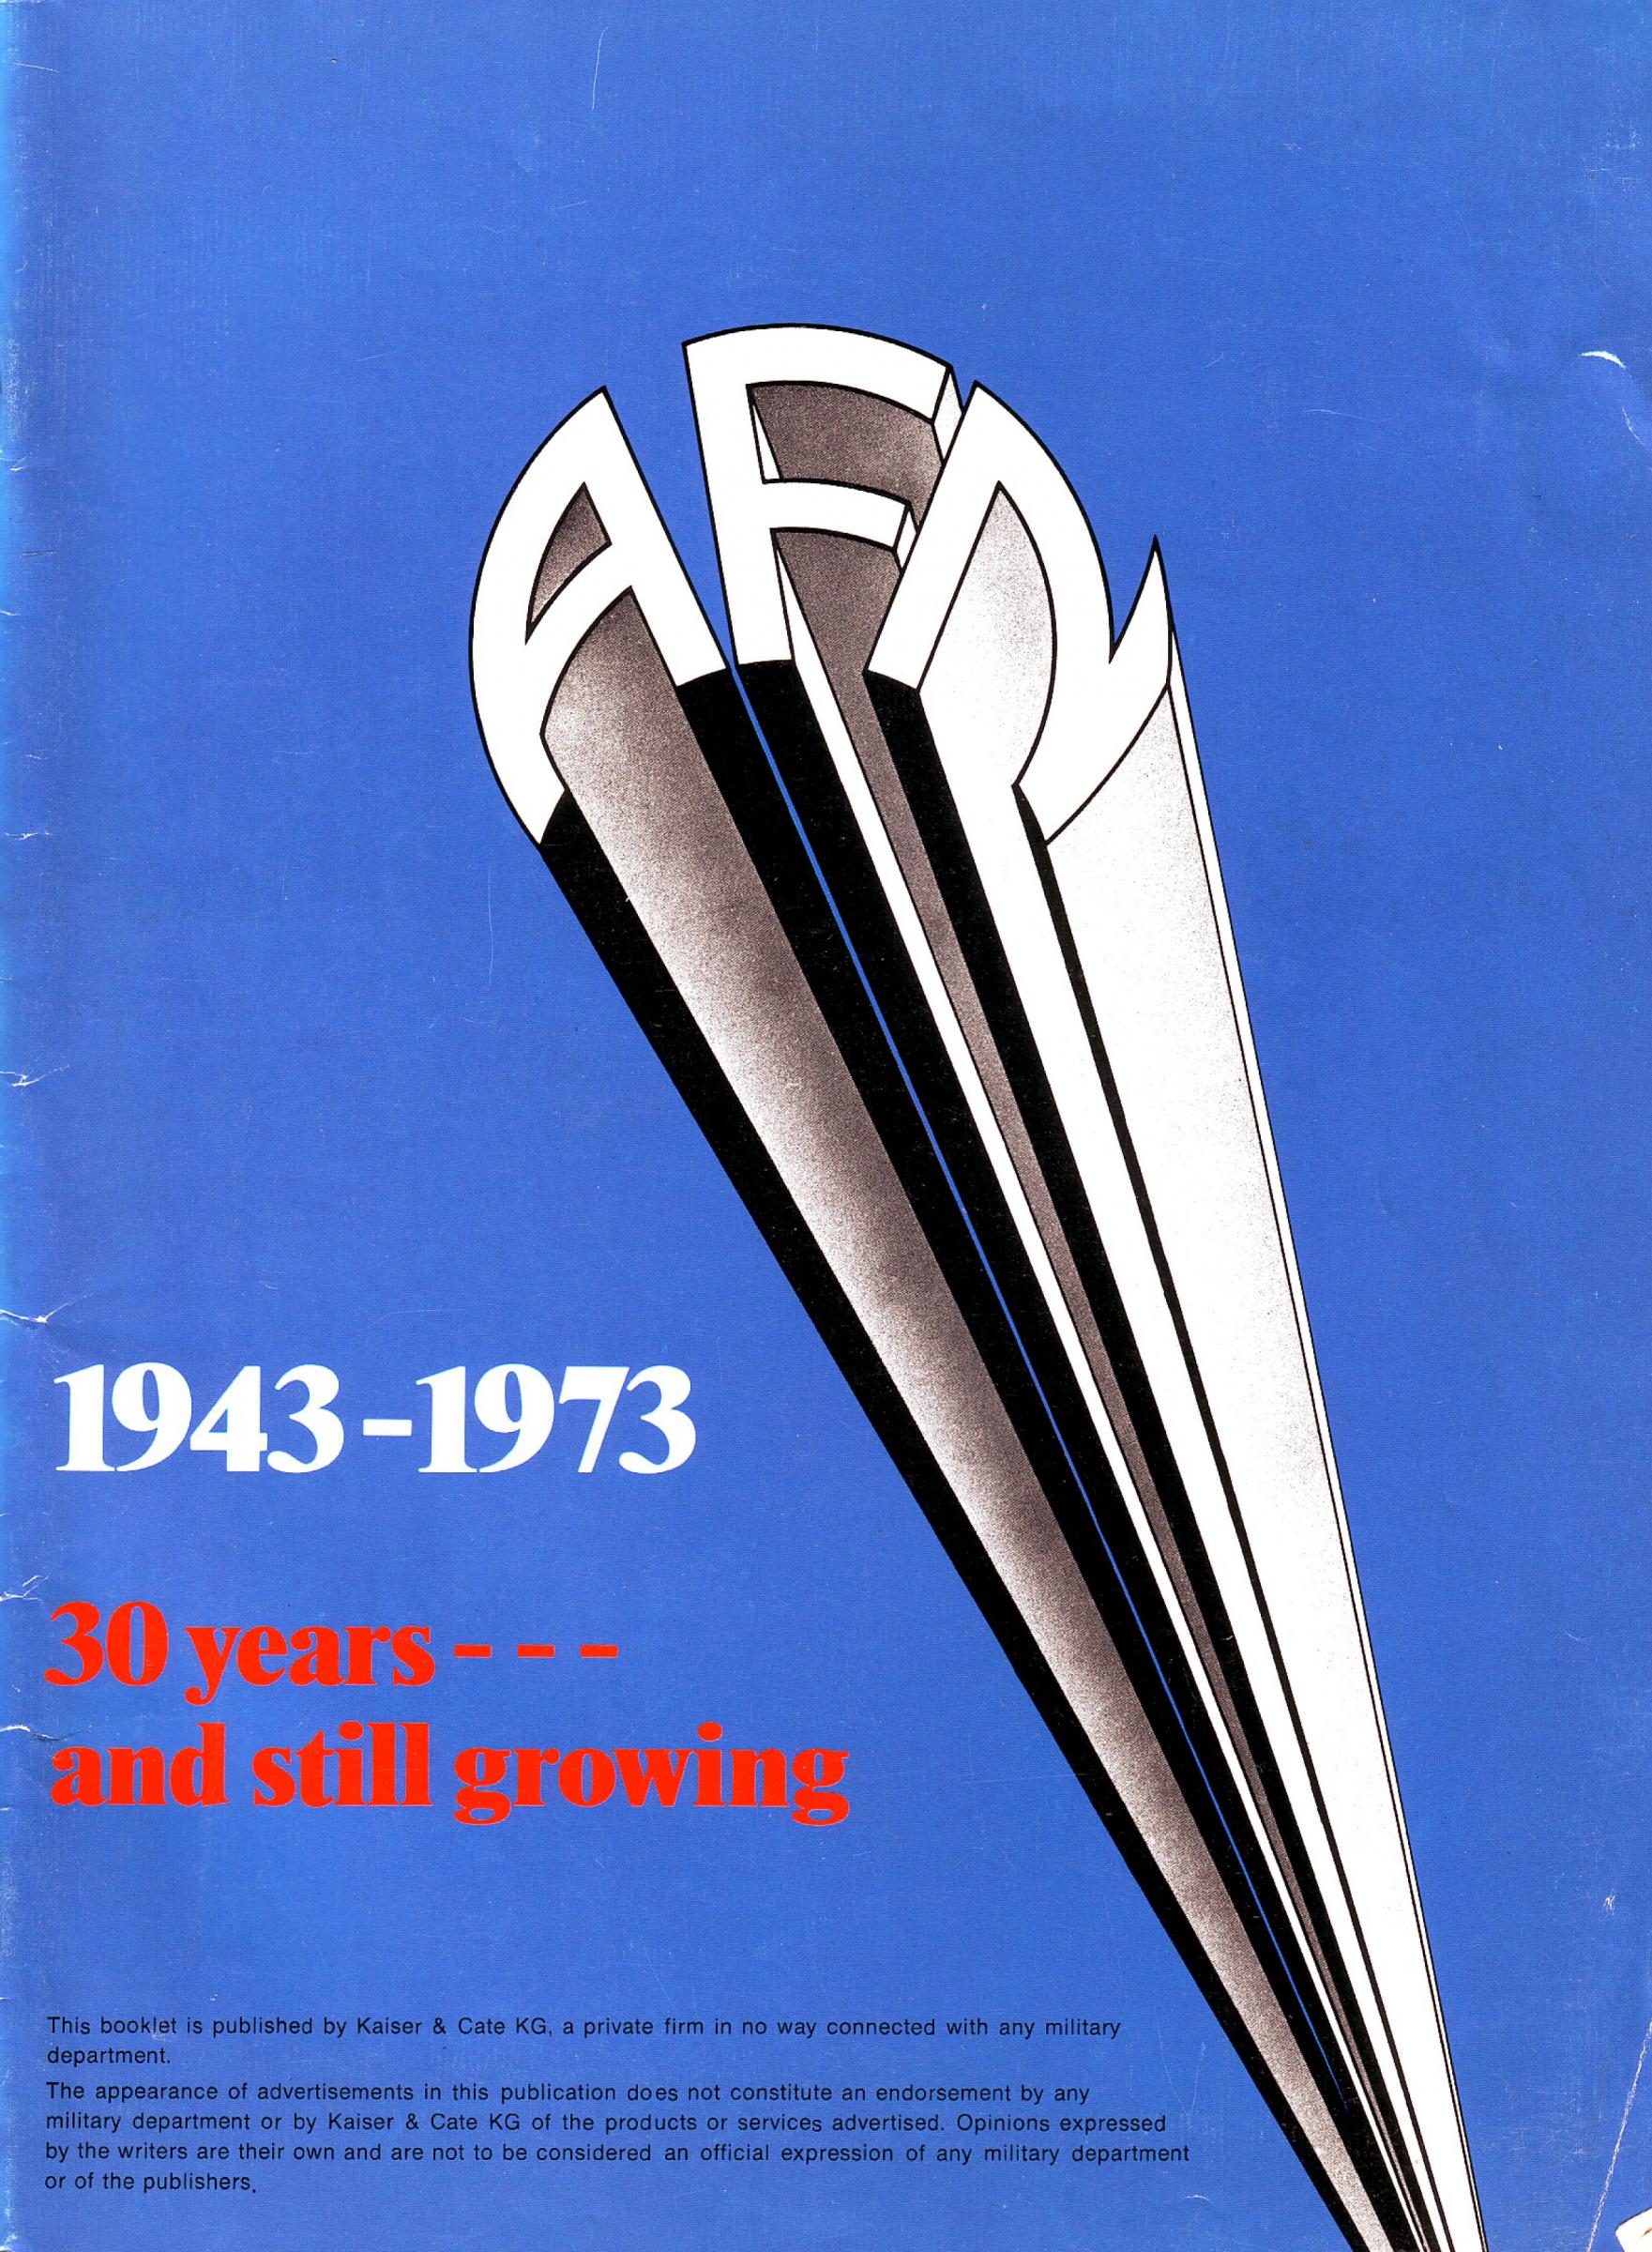 1973 AFN 30 years